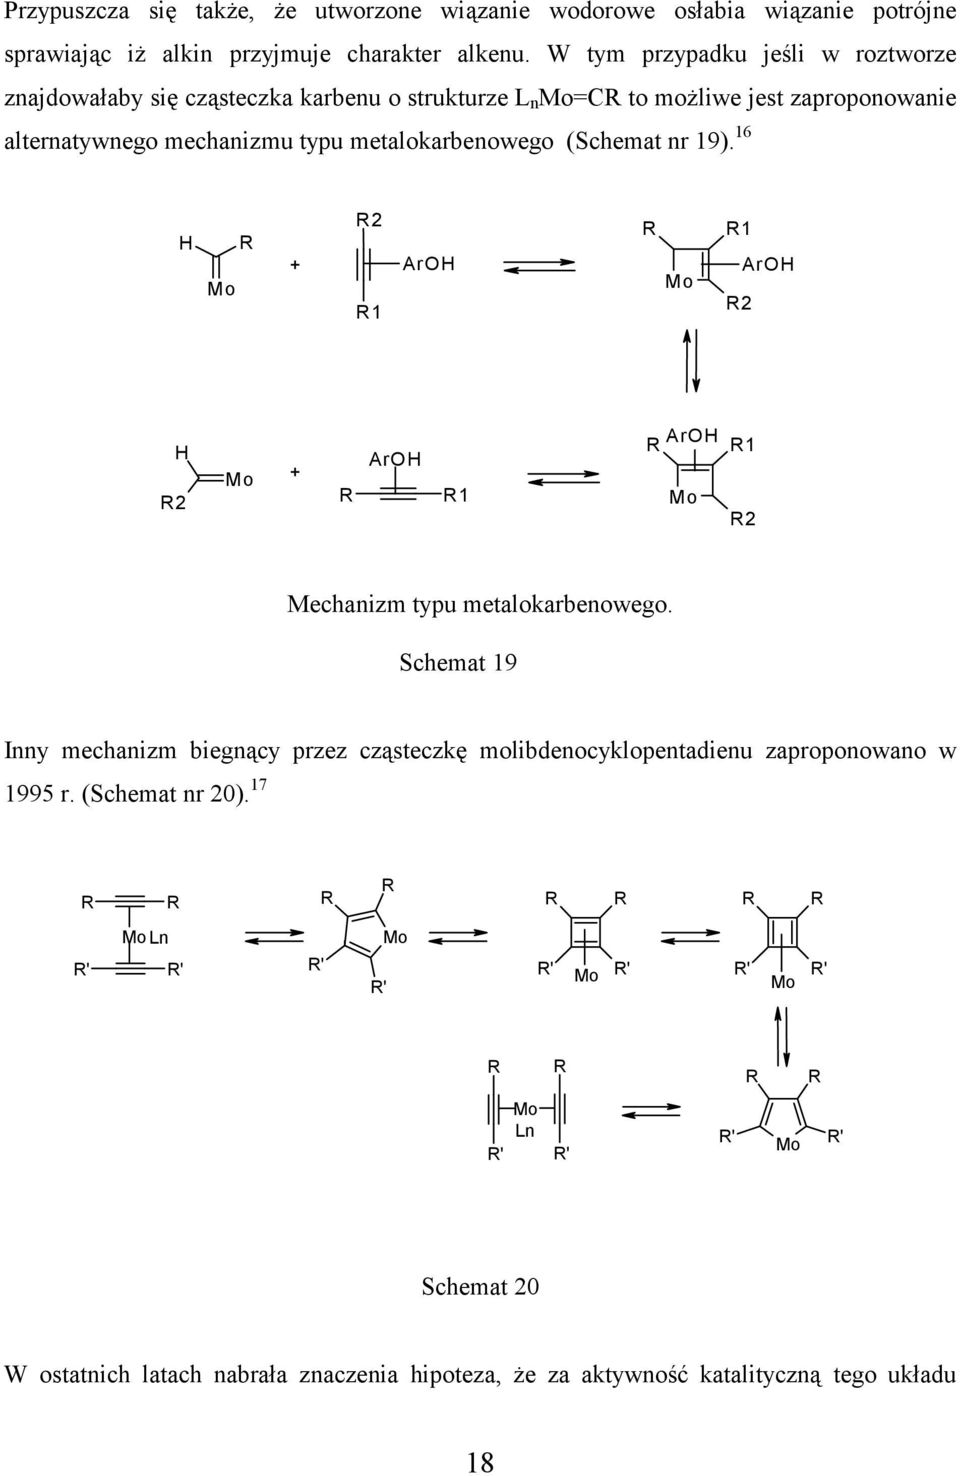 metalokarbenowego (Schemat nr 19). 16 H Mo + 2 1 ArH Mo 1 2 ArH H 2 Mo + ArH 1 ArH Mo 1 2 Mechanizm typu metalokarbenowego.